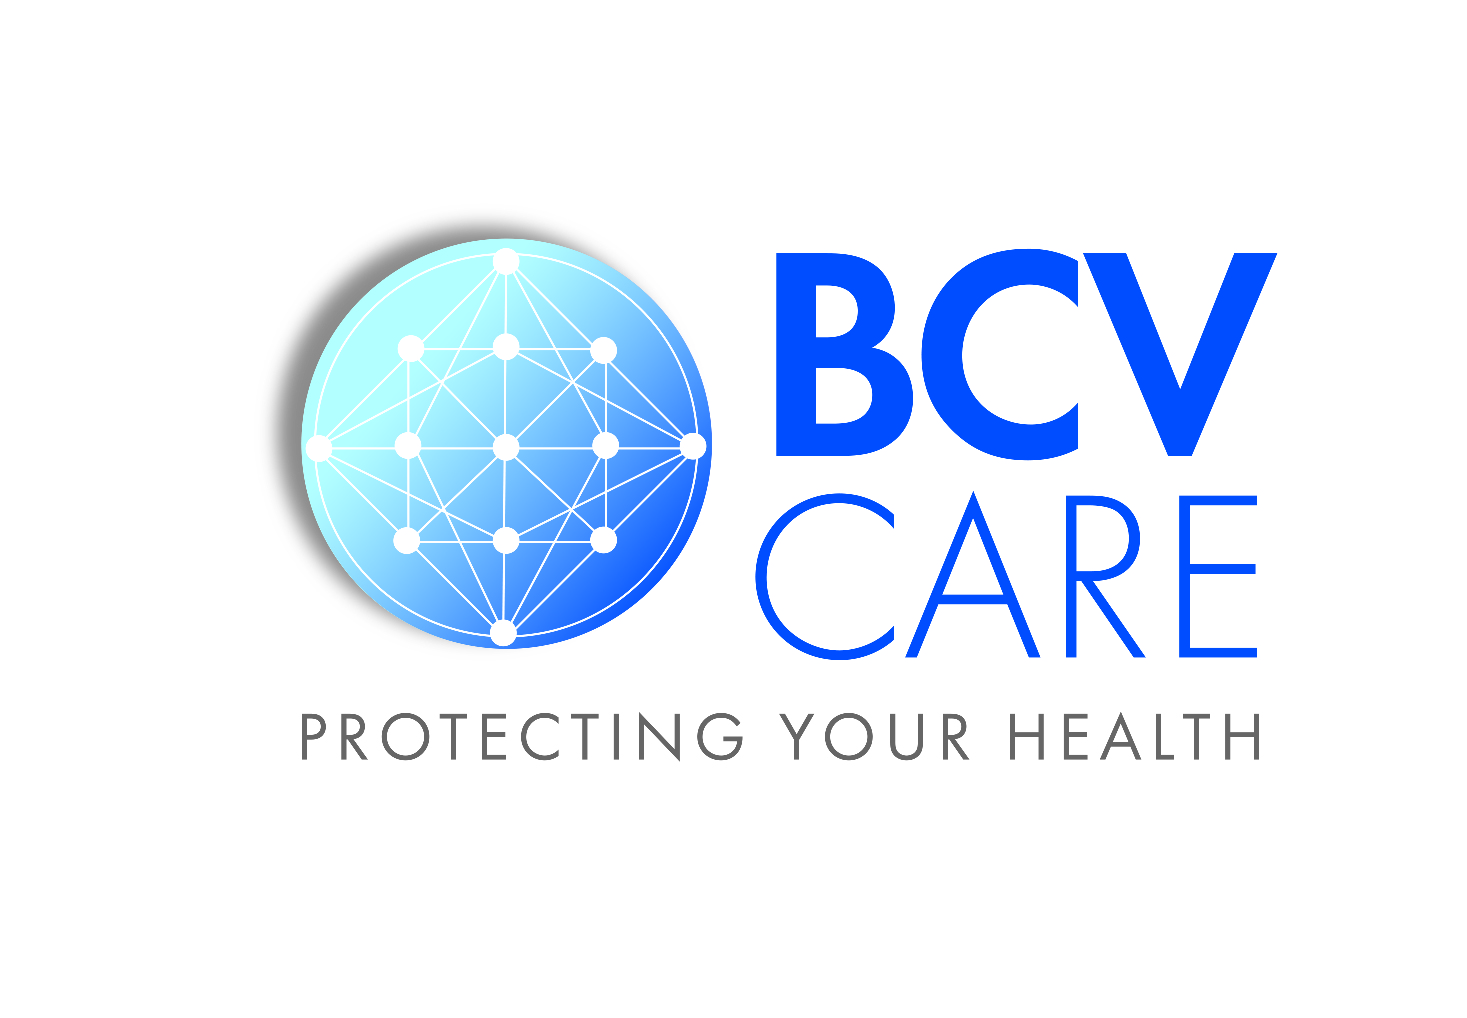 BCV Care